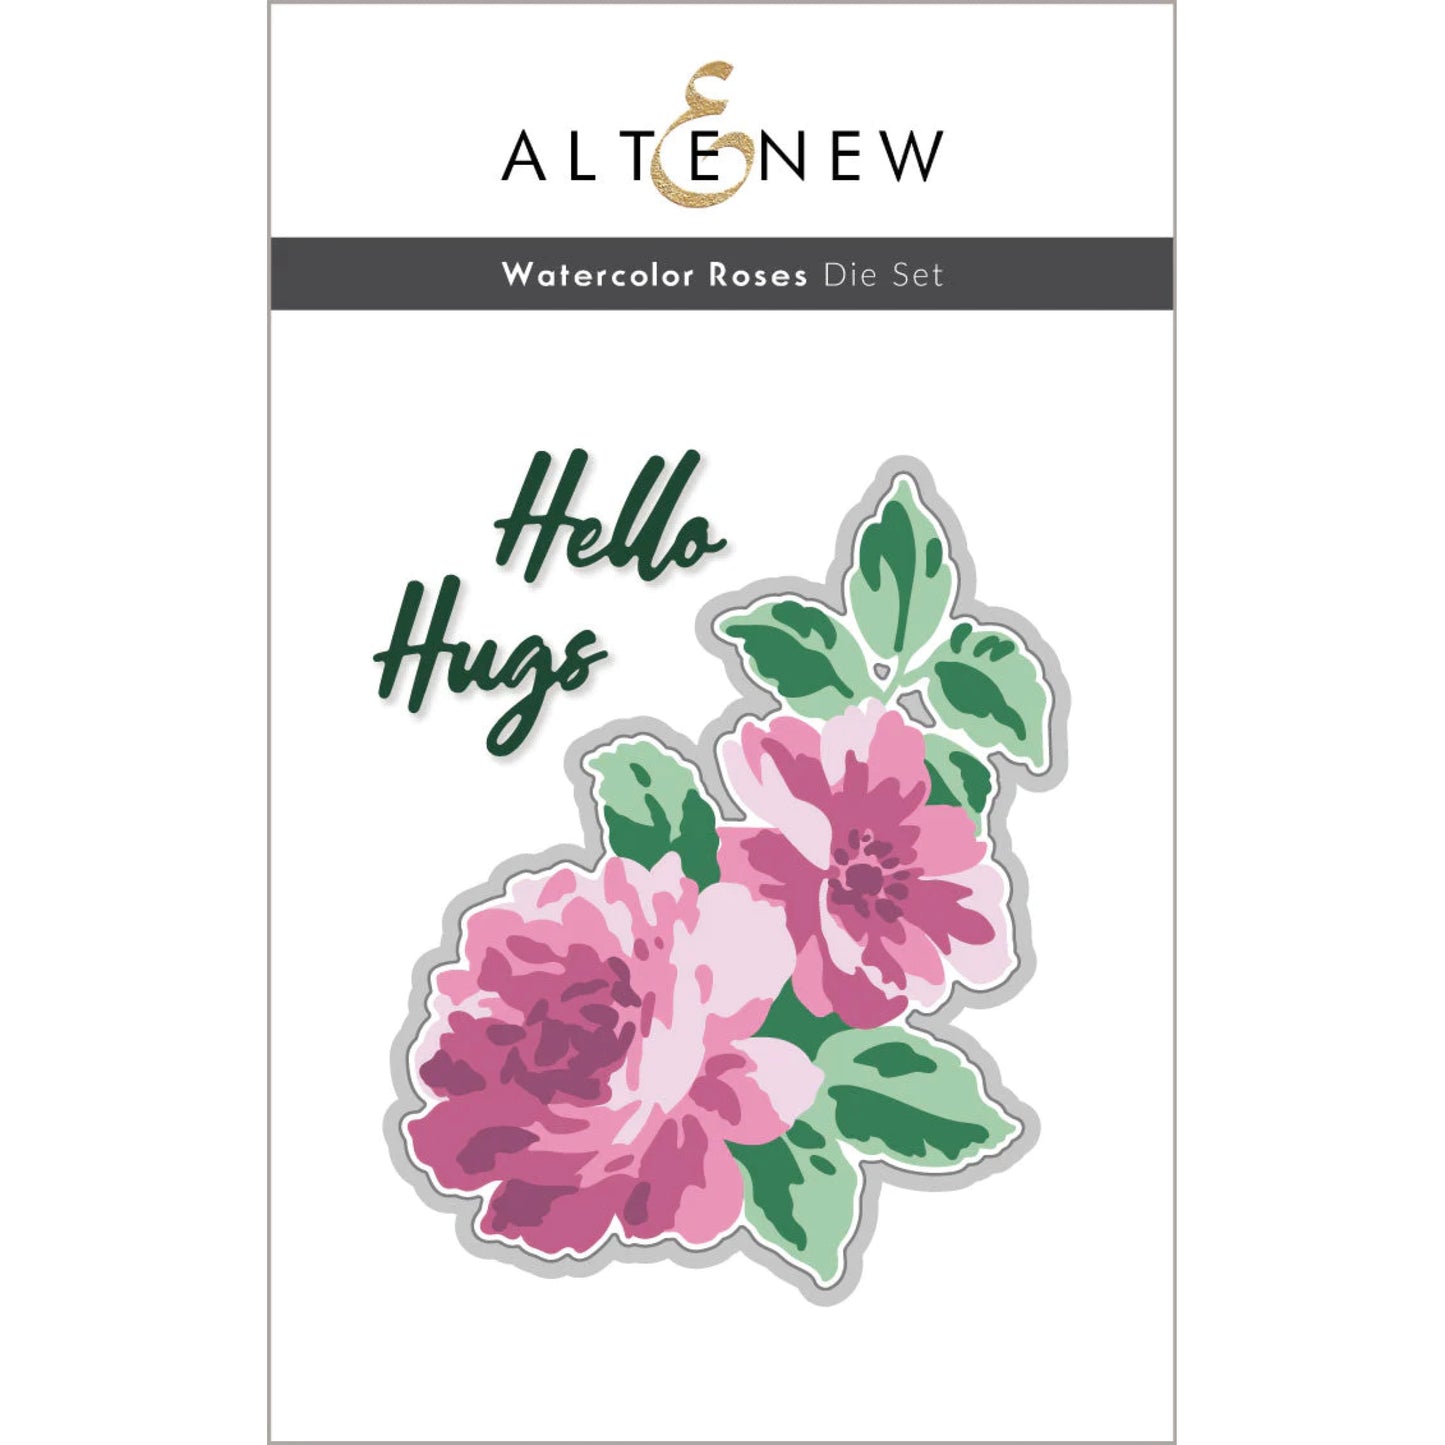 Altenew Watercolor Roses